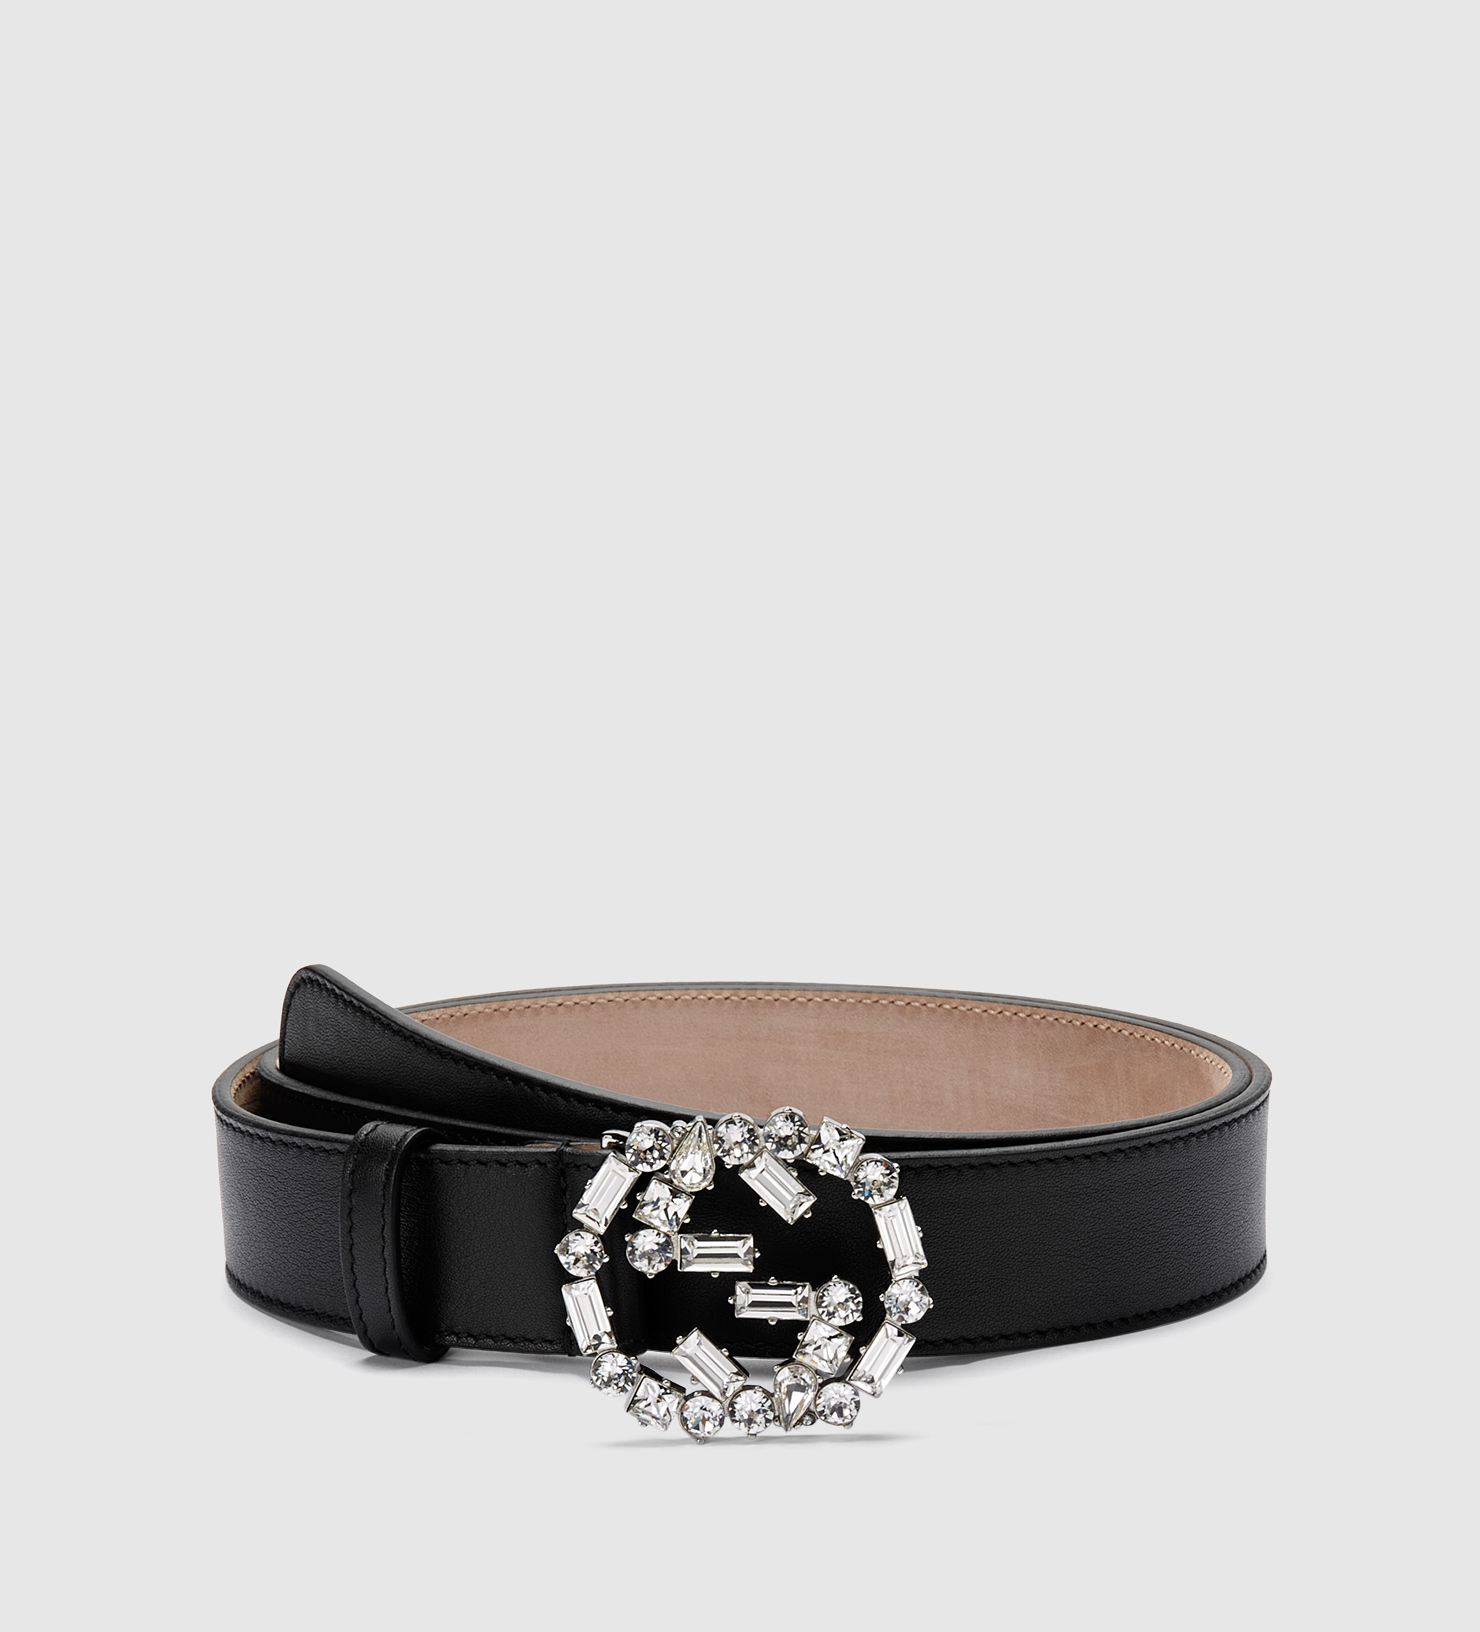 Lyst - Gucci Black Leather Belt With Crystal Interlocking G Buckle in Black